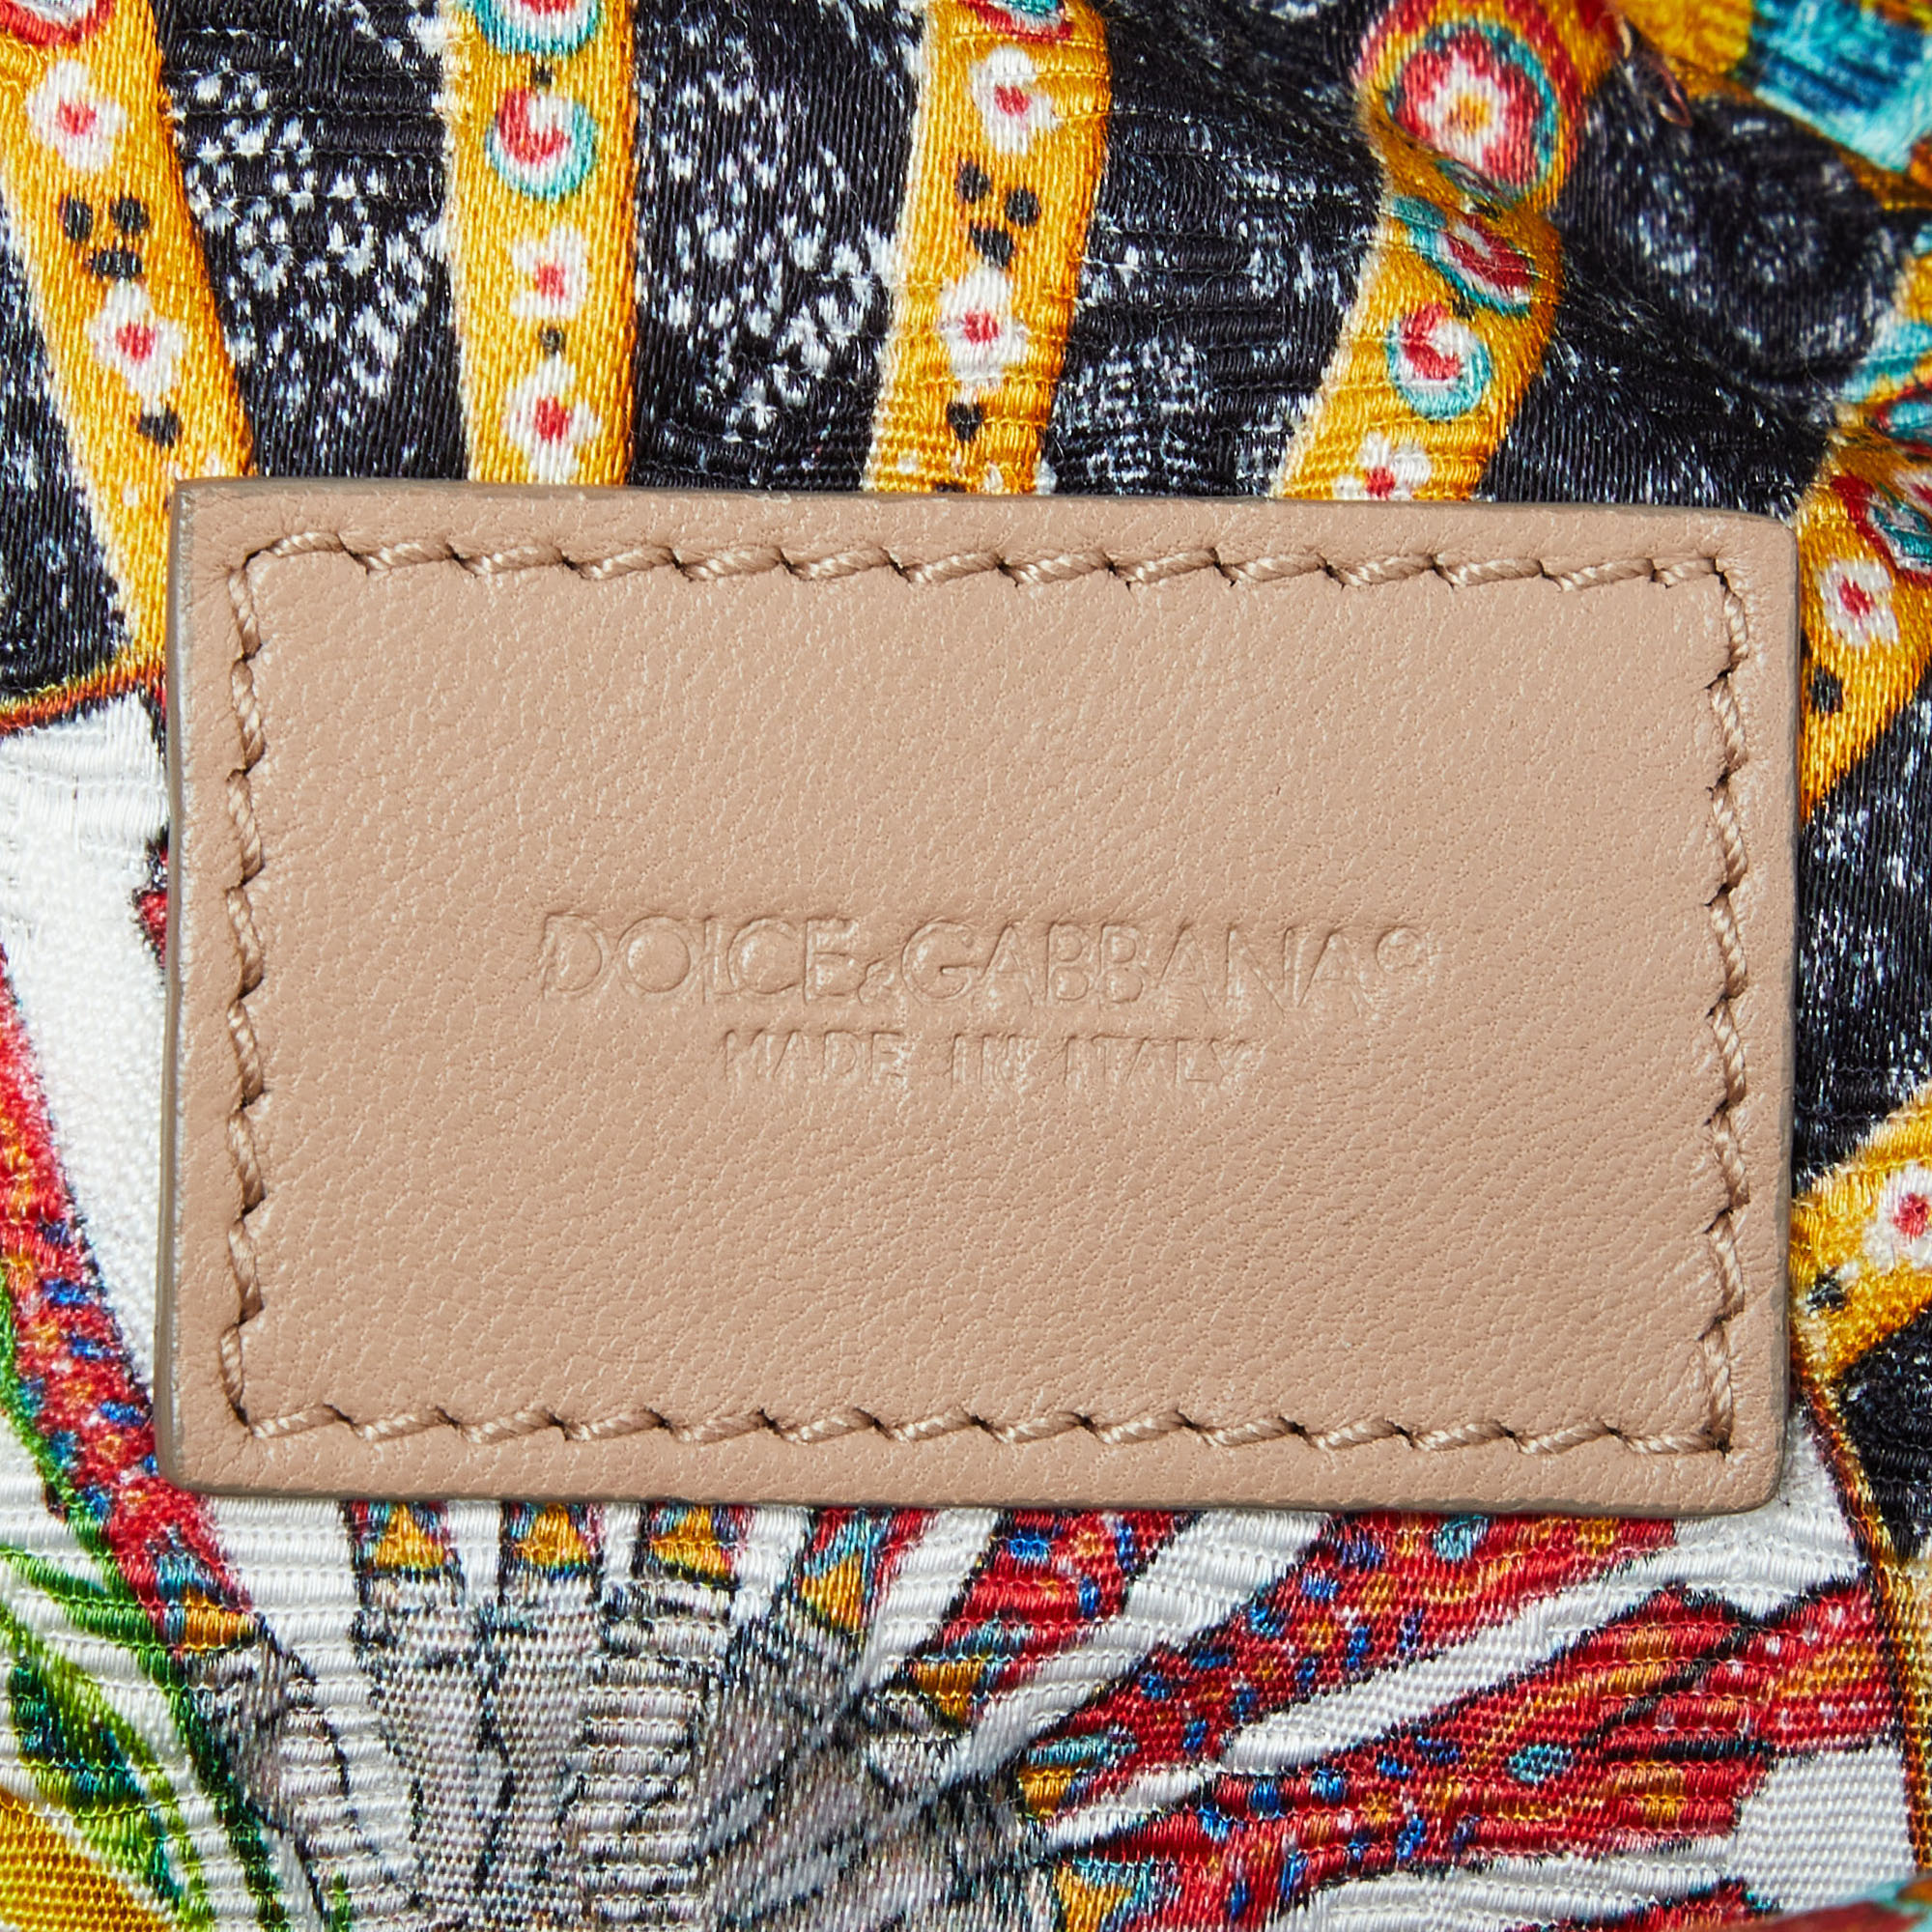 Dolce & Gabbana Beige Leather Round Glam Crossbody Bag